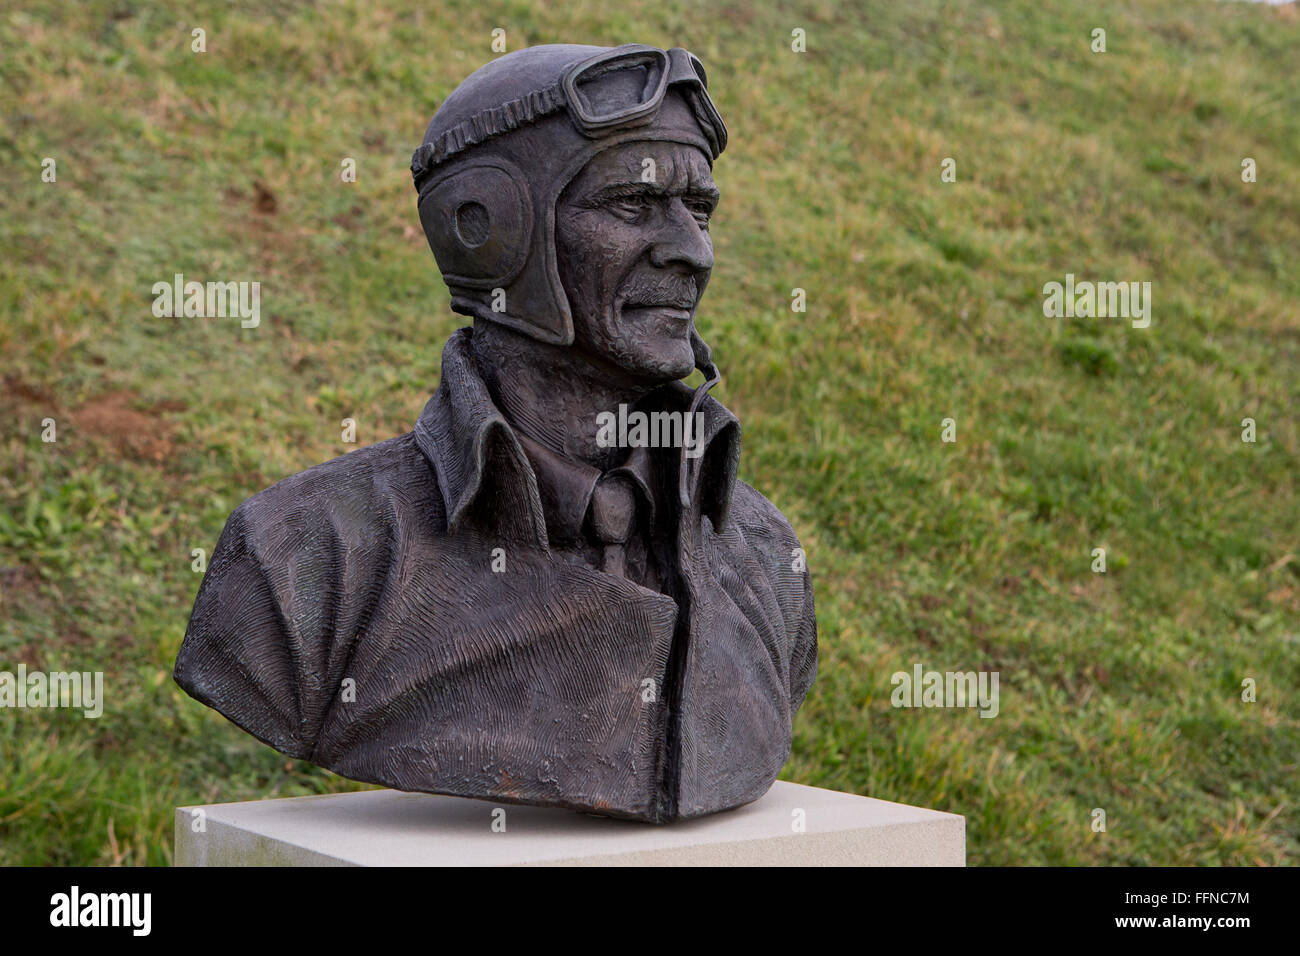 Statue of Air Chief Marshal Sir Keith Rodney Park. Stock Photo